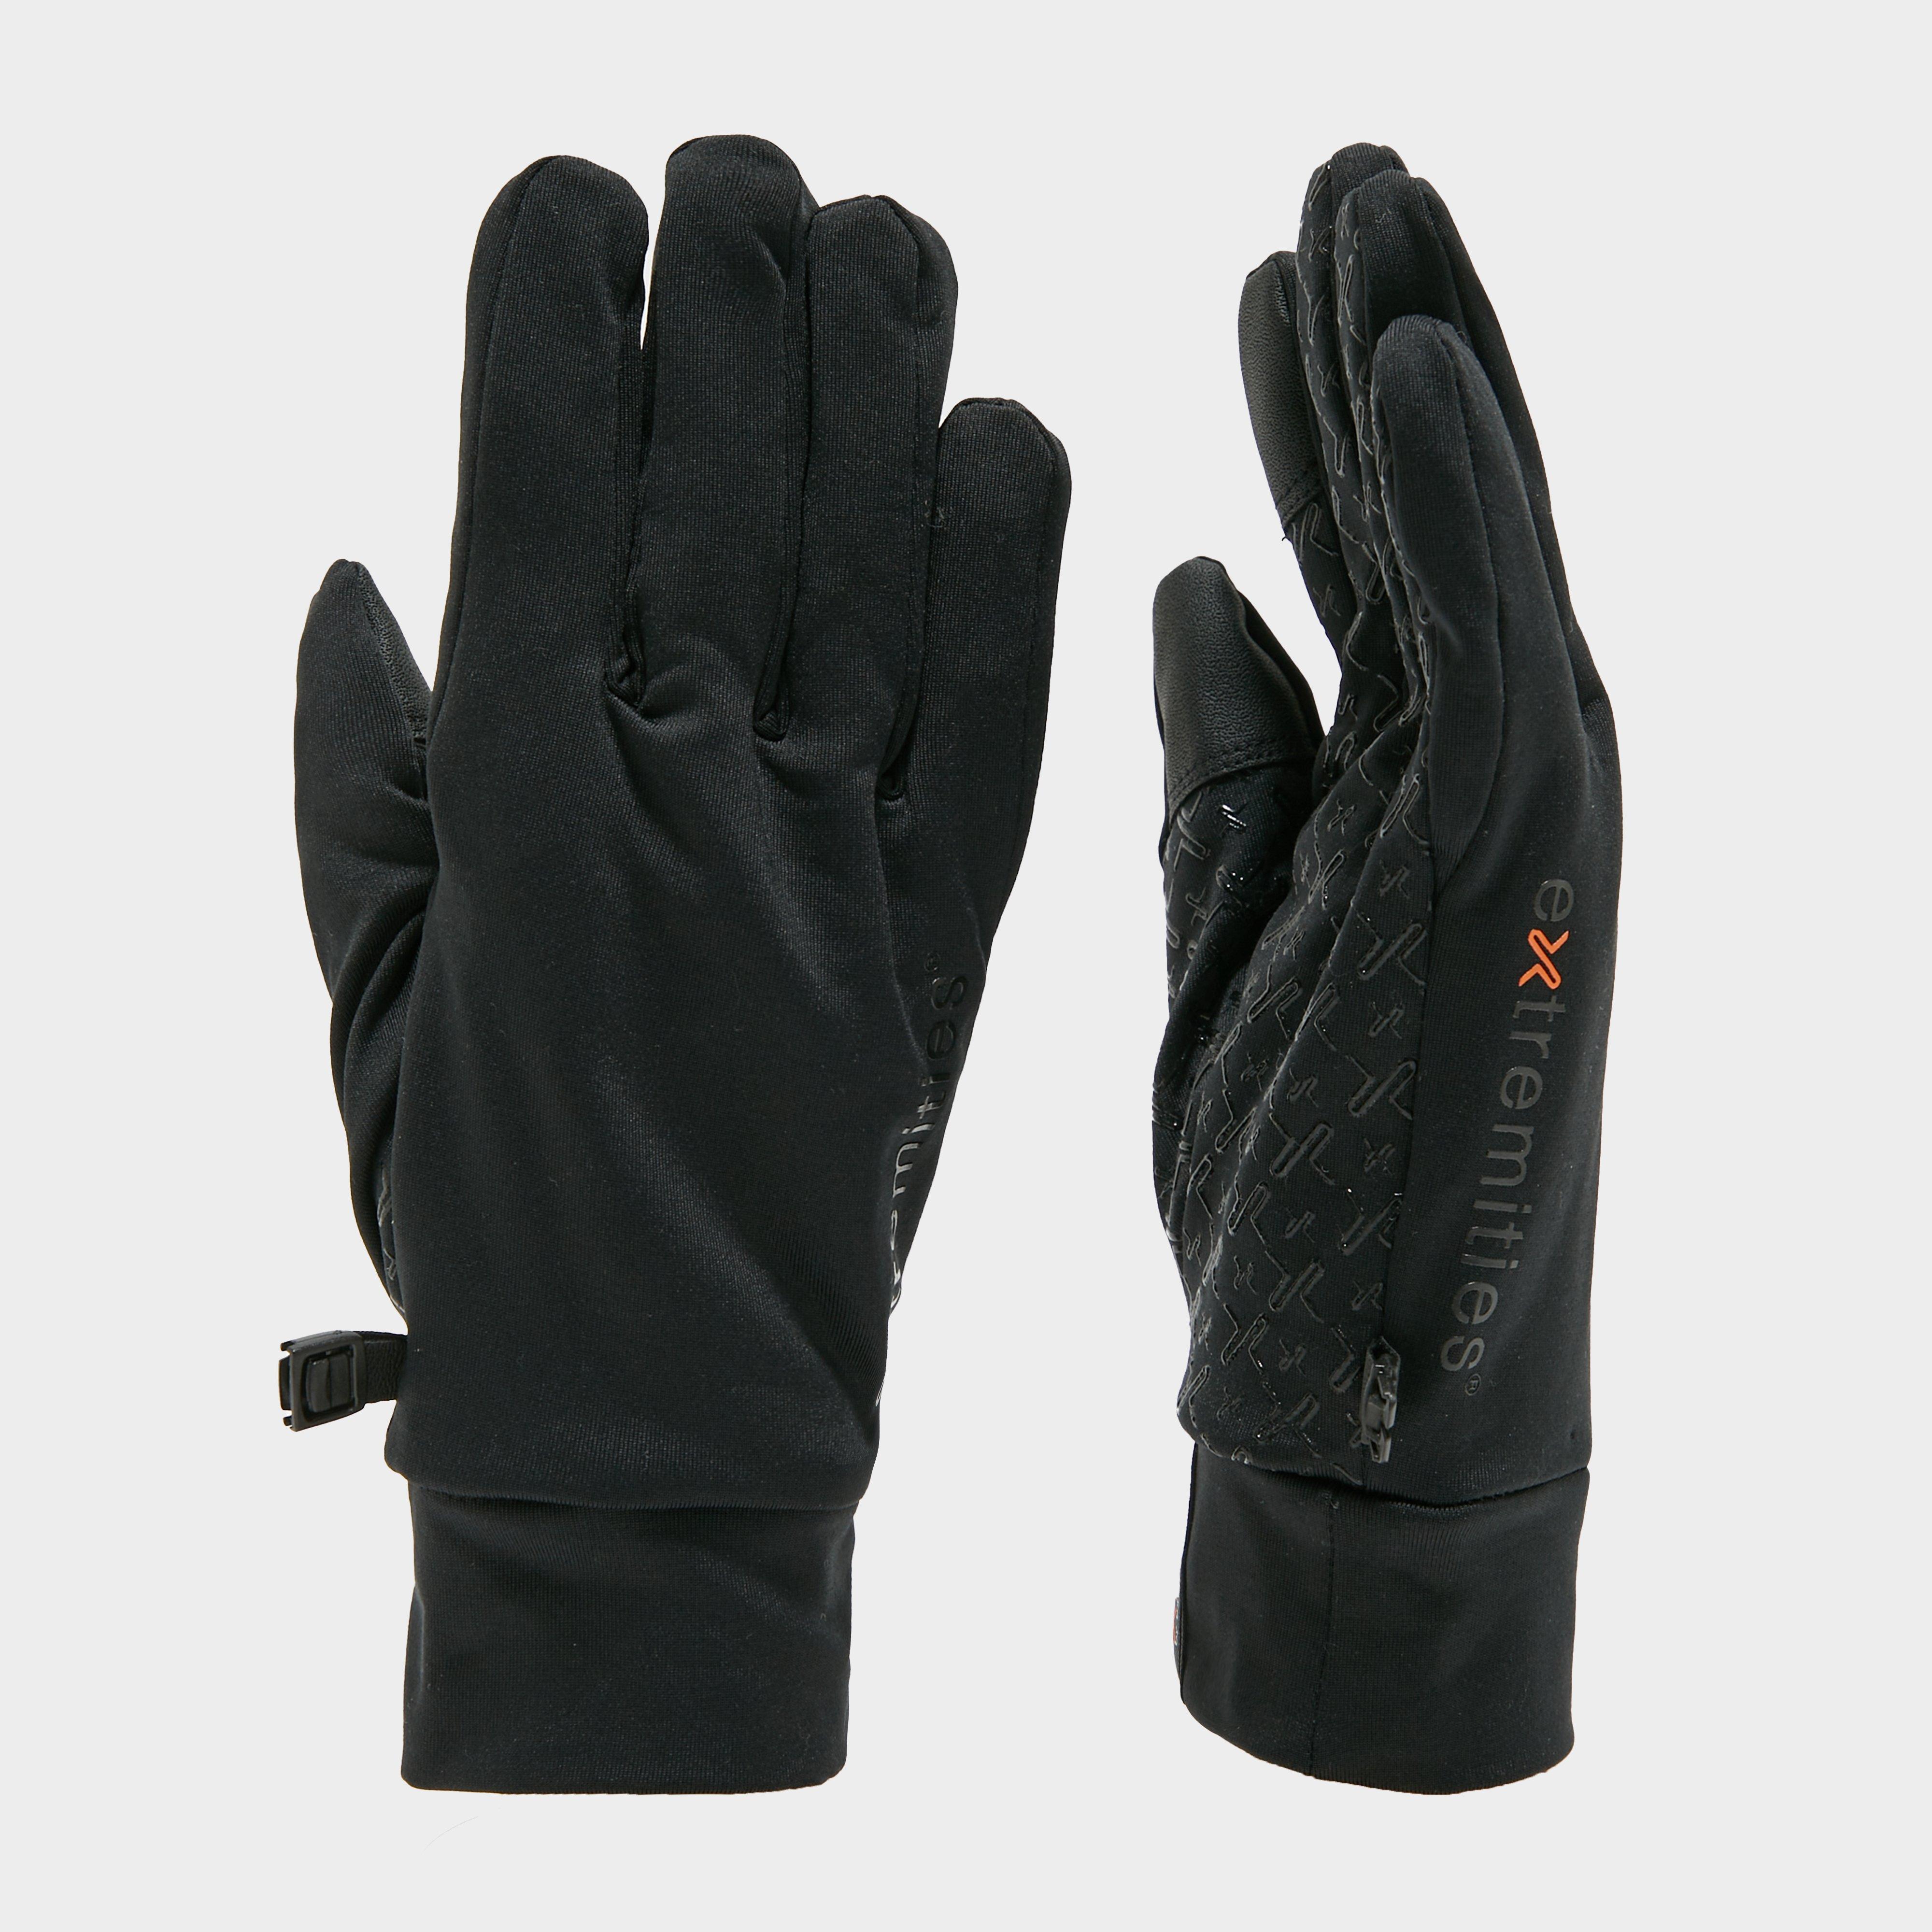 Extremities Waterproof Sticky Power Liner Glove  Black